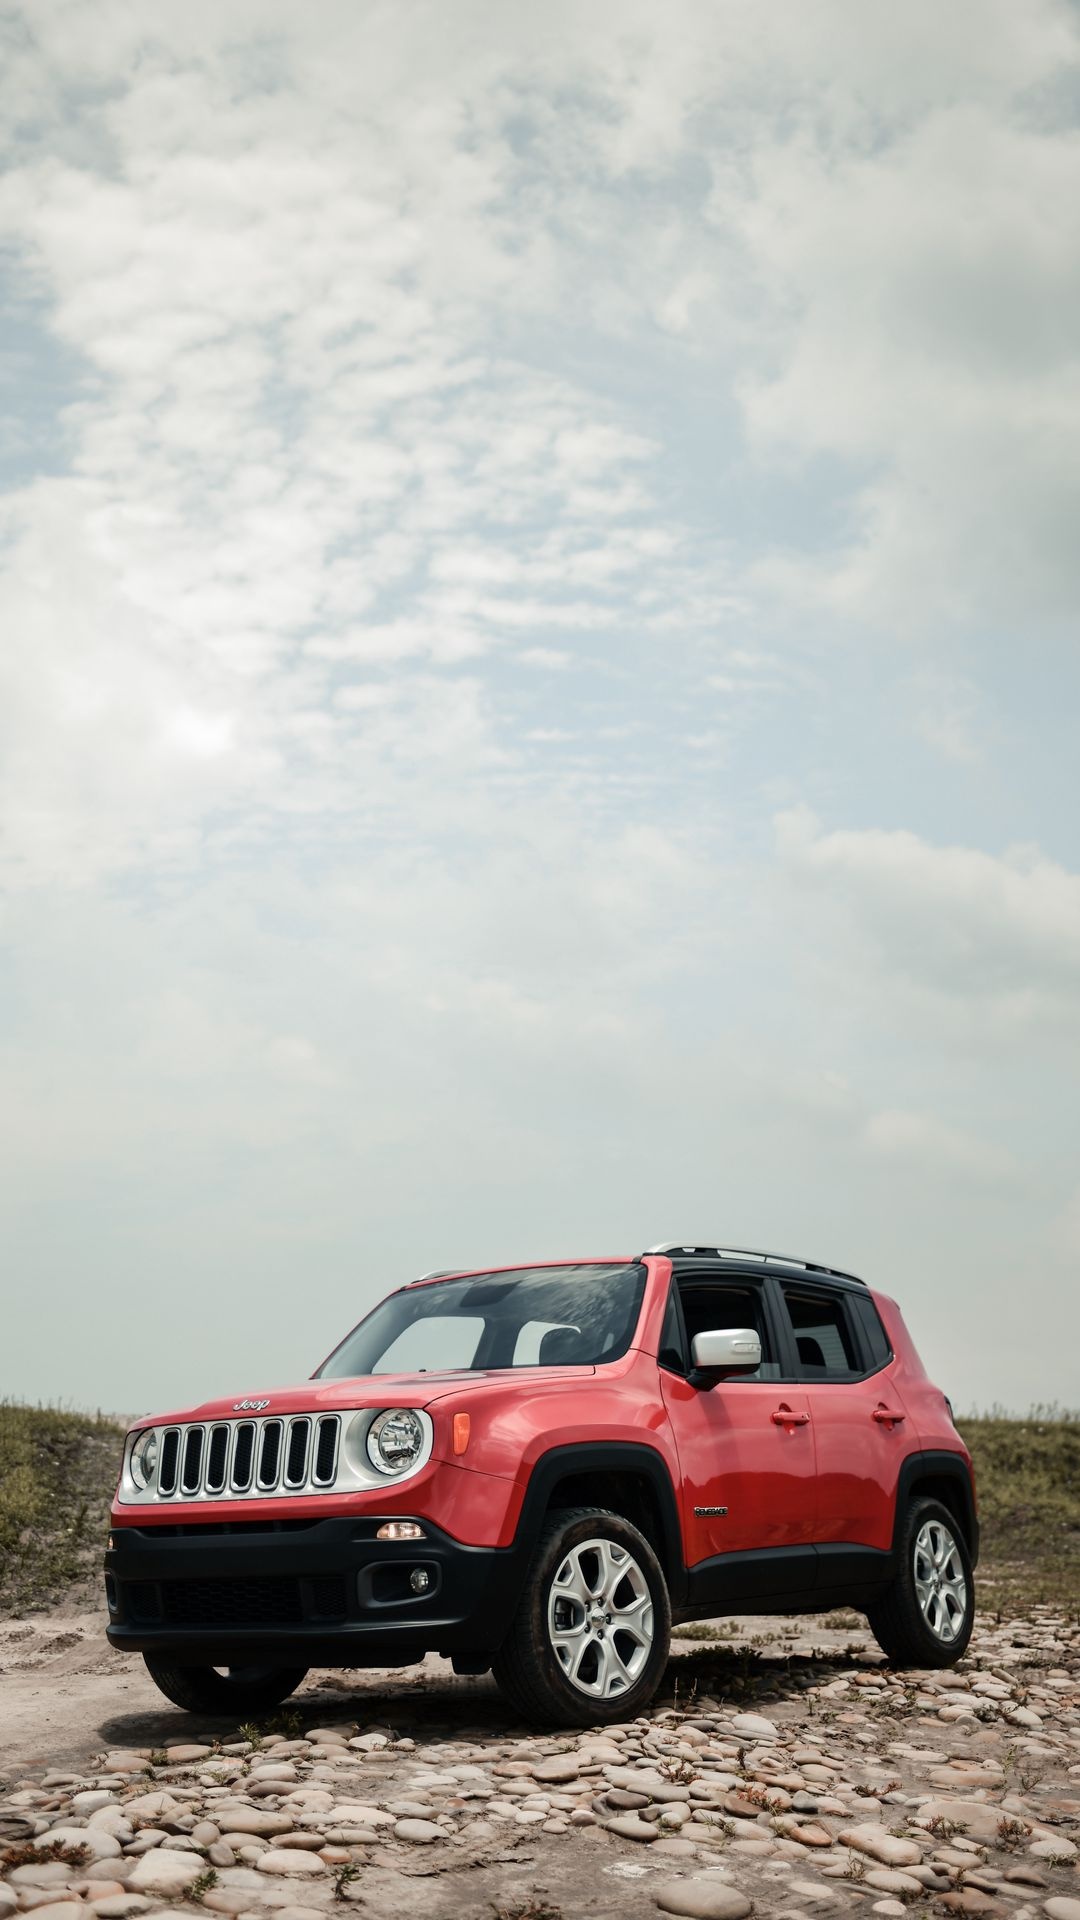 Jeep Renegade, Best phone wallpaper, Representing adventure, Off-road capabilities, 1080x1920 Full HD Handy